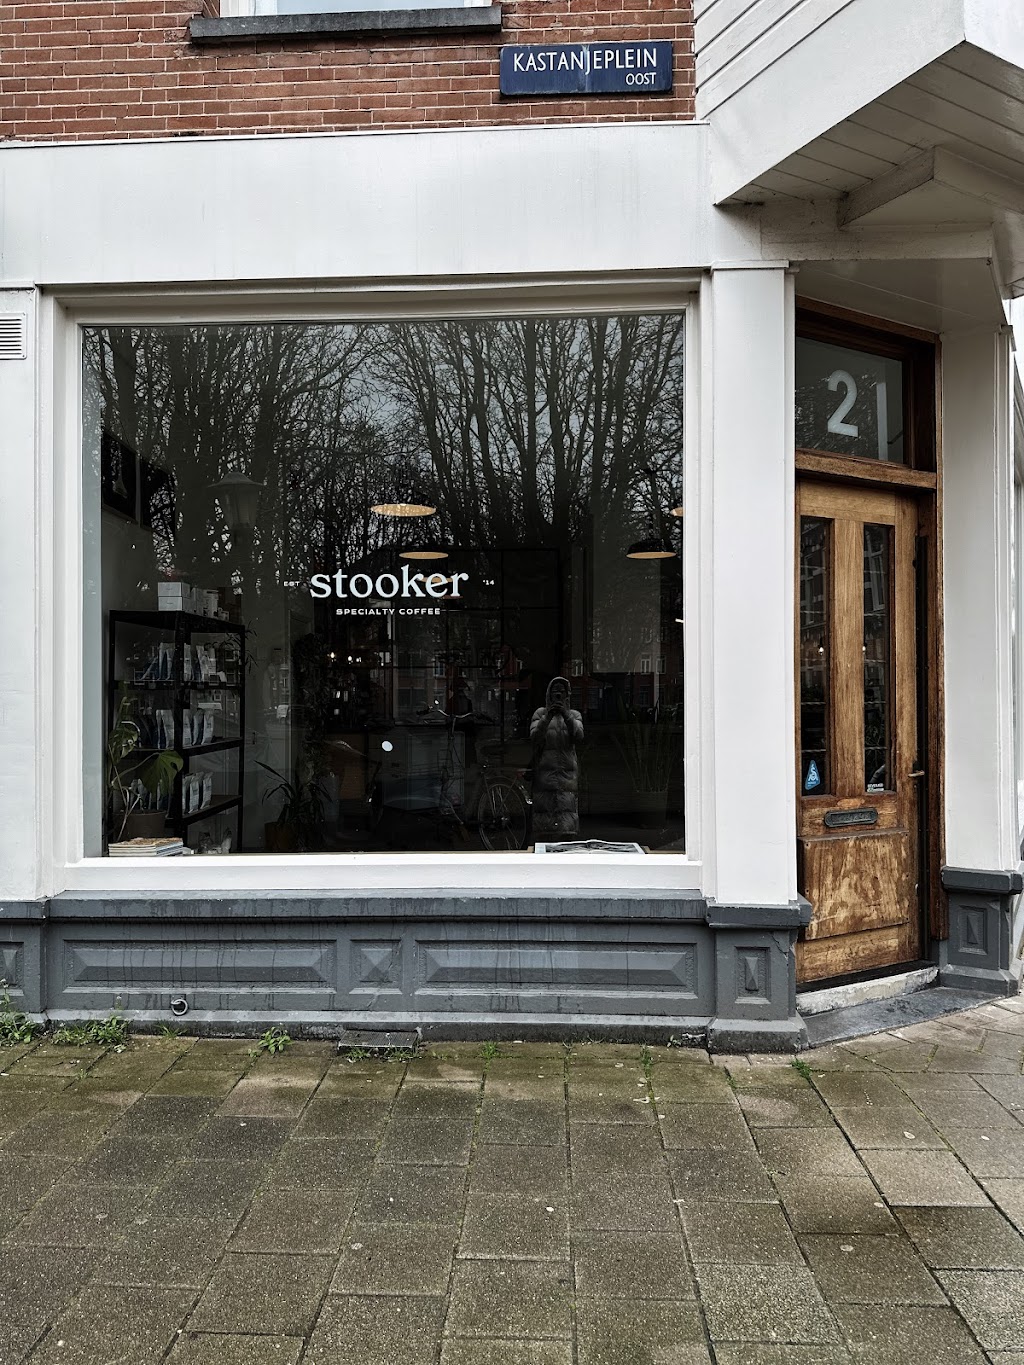 Stooker Roasting Company | Kastanjeplein 2, 1092 CJ Amsterdam, Netherlands | Phone: 020 737 1714